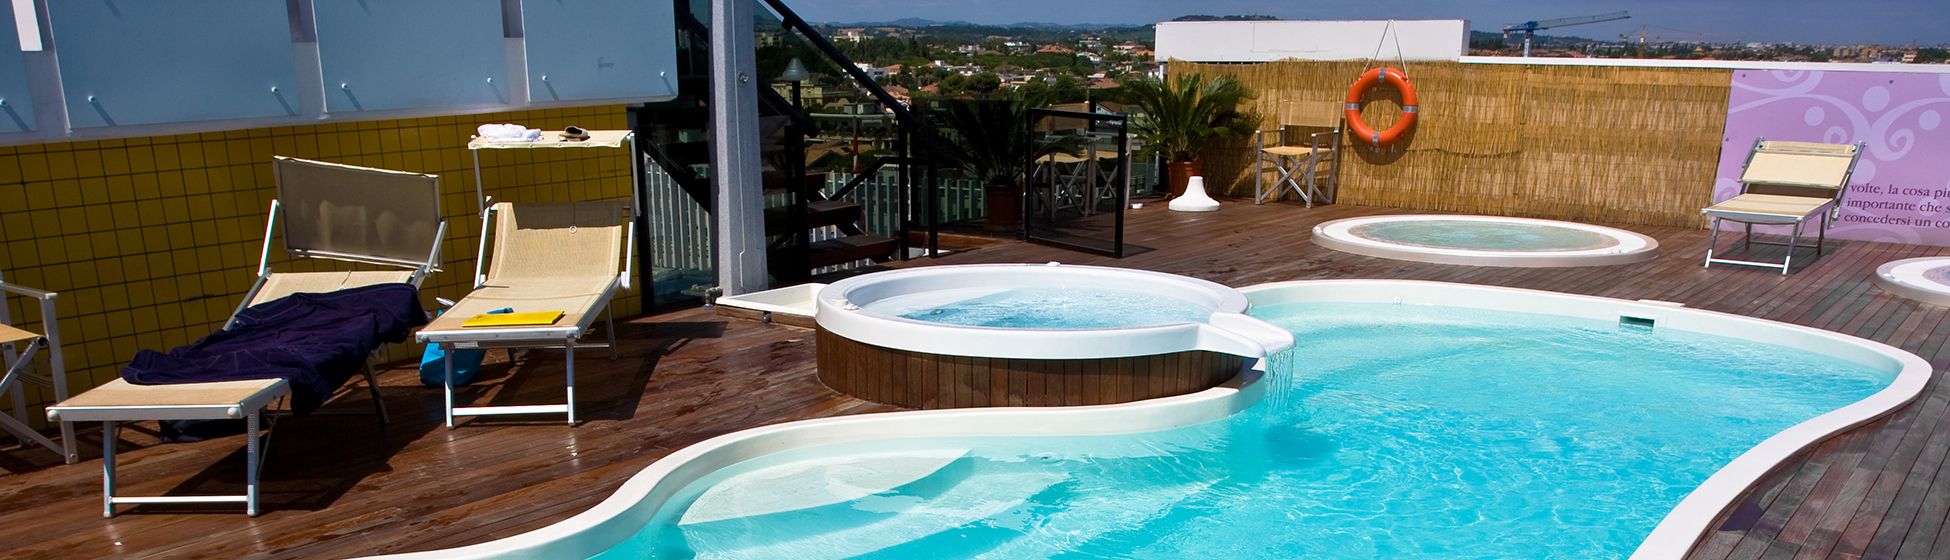 Location maison martinique avec piscine